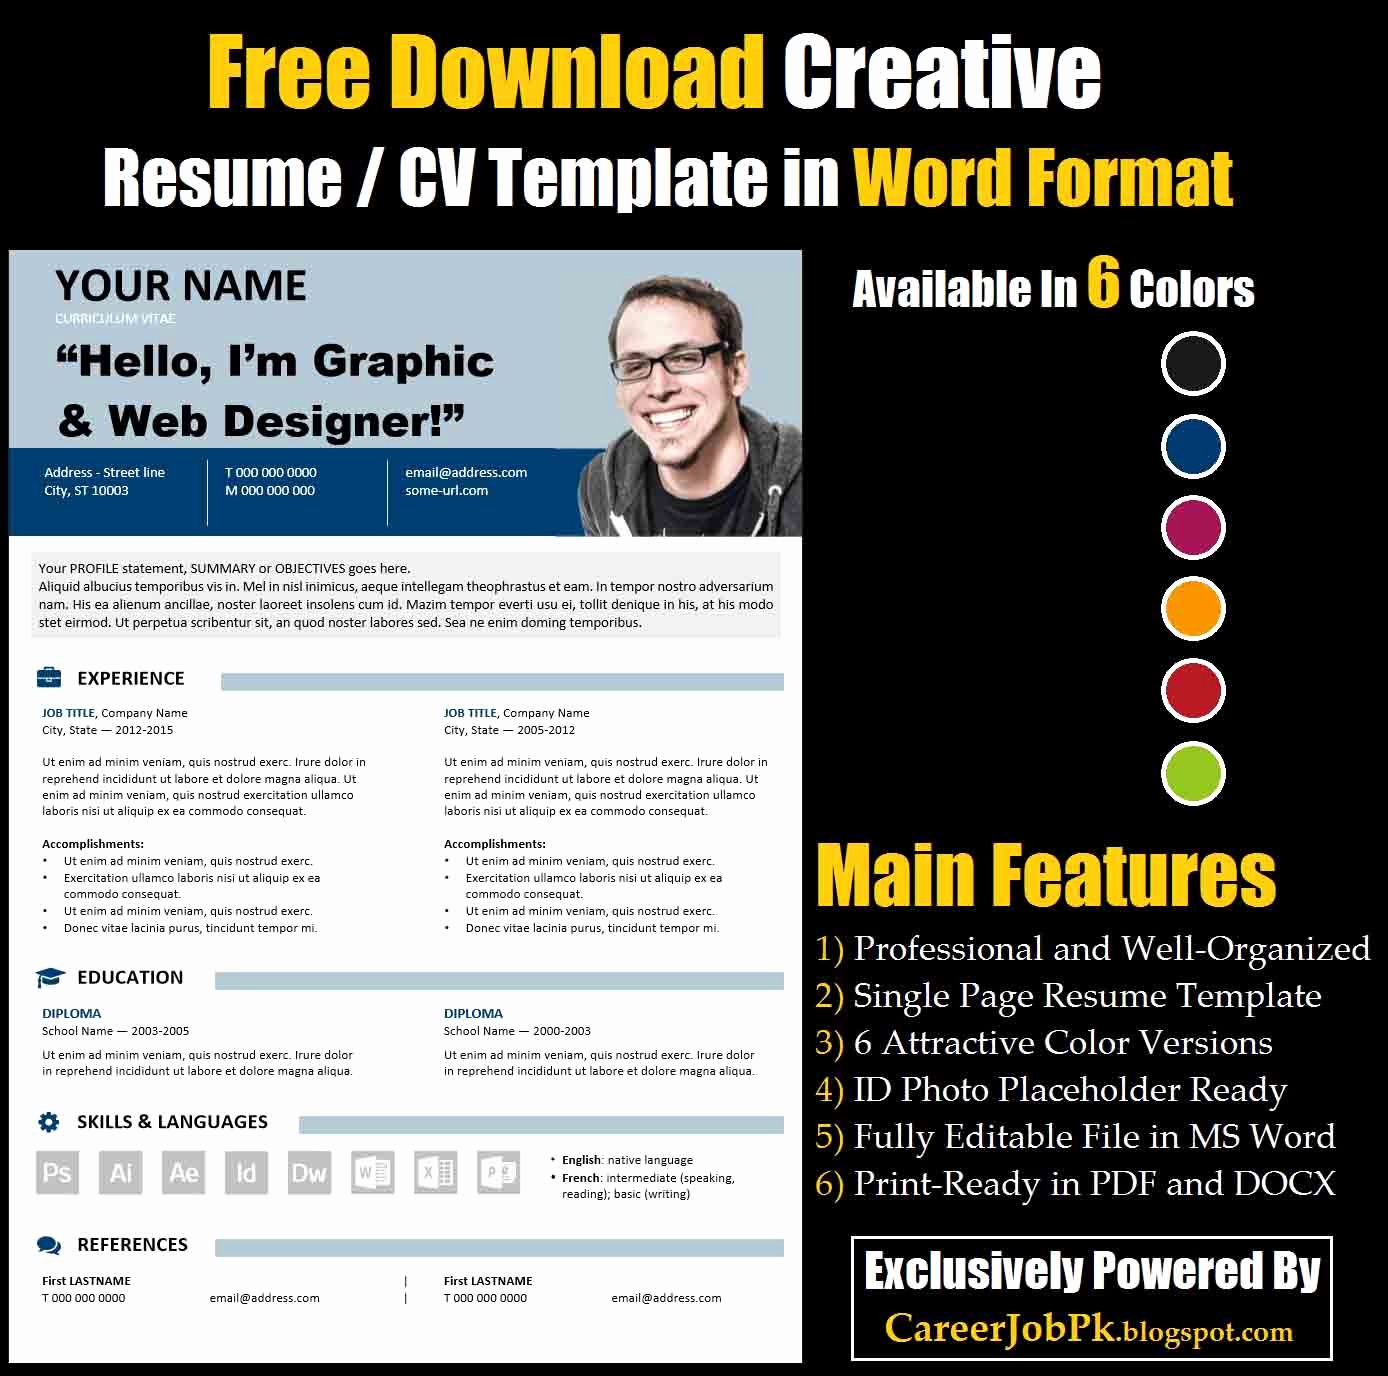 Resume Template Download Word Free Fresh Free Download Editable Resume Cv Template In Ms Word format